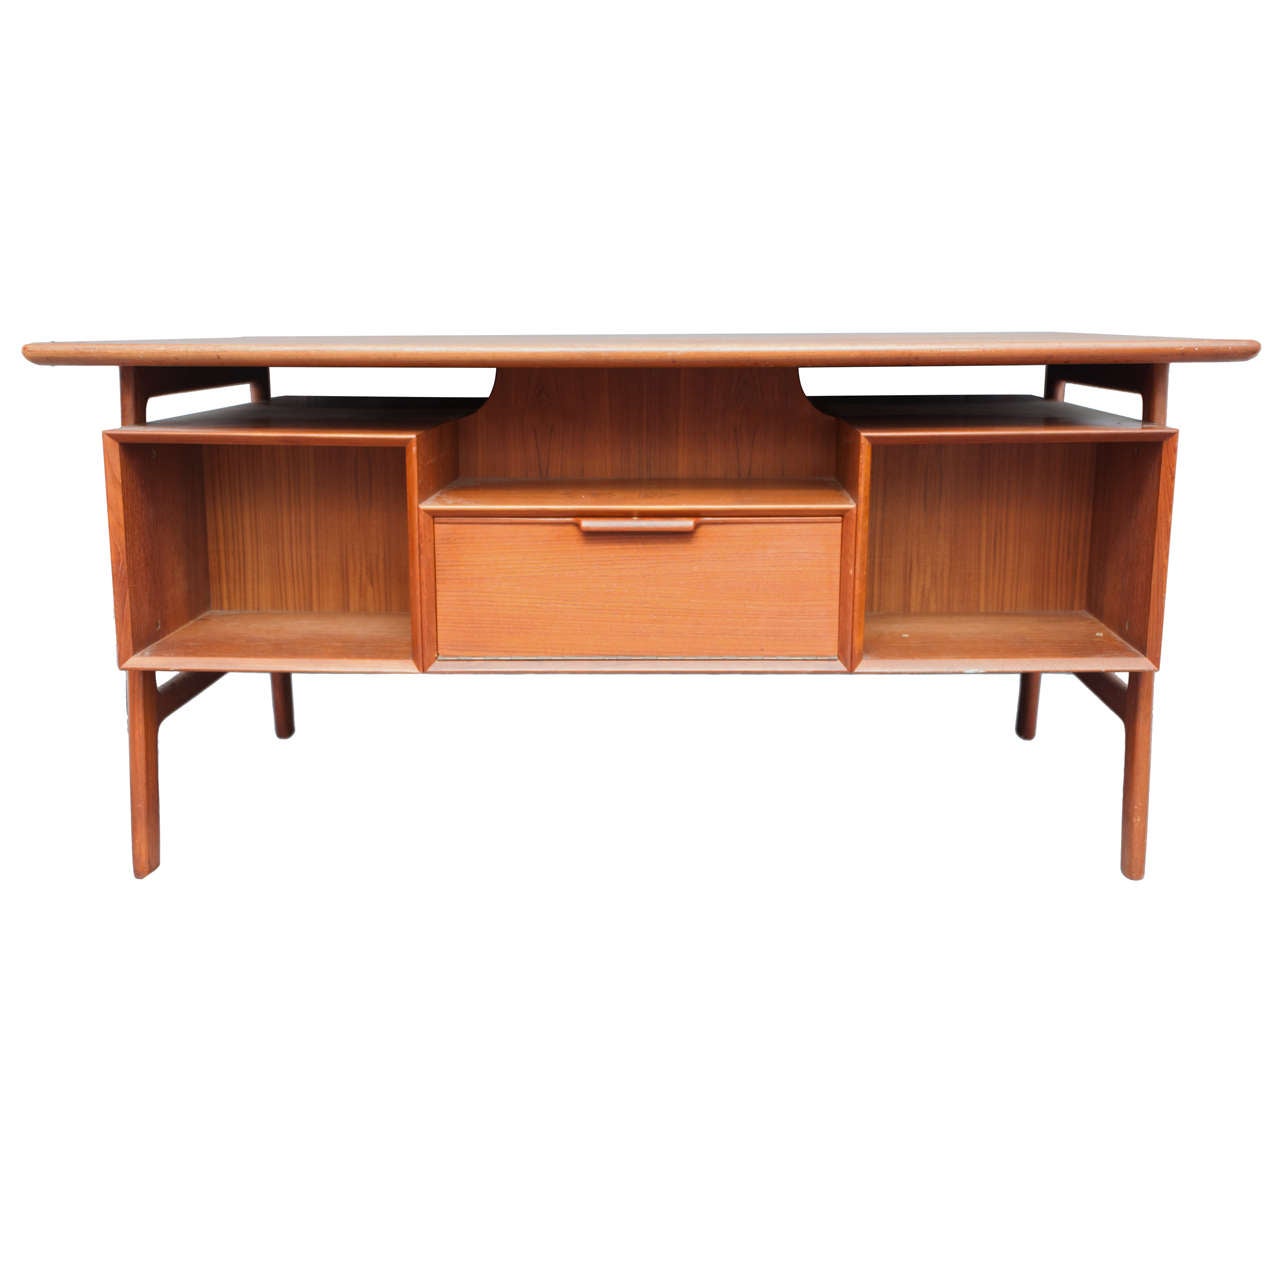 A Teak wood Danish free standing Desk, designed by Gunni Omann for Omann Junn. Model #75.
154cms wide x 84cms d
Danish
Circa 1960